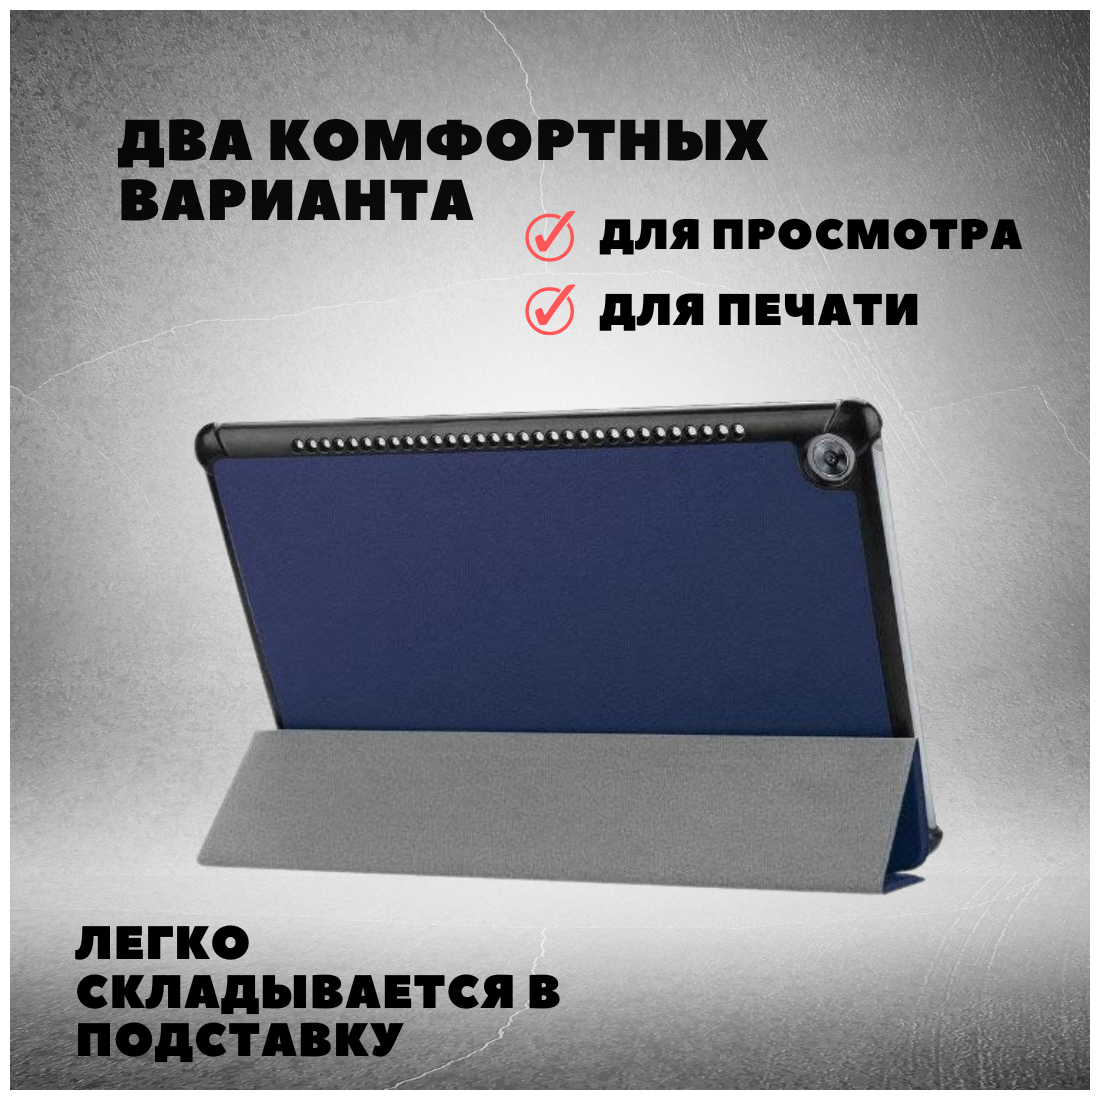 Чехол книжка /Планшетный чехол для Huawei MediaPad M5 108/ M5 108 Pro Синий